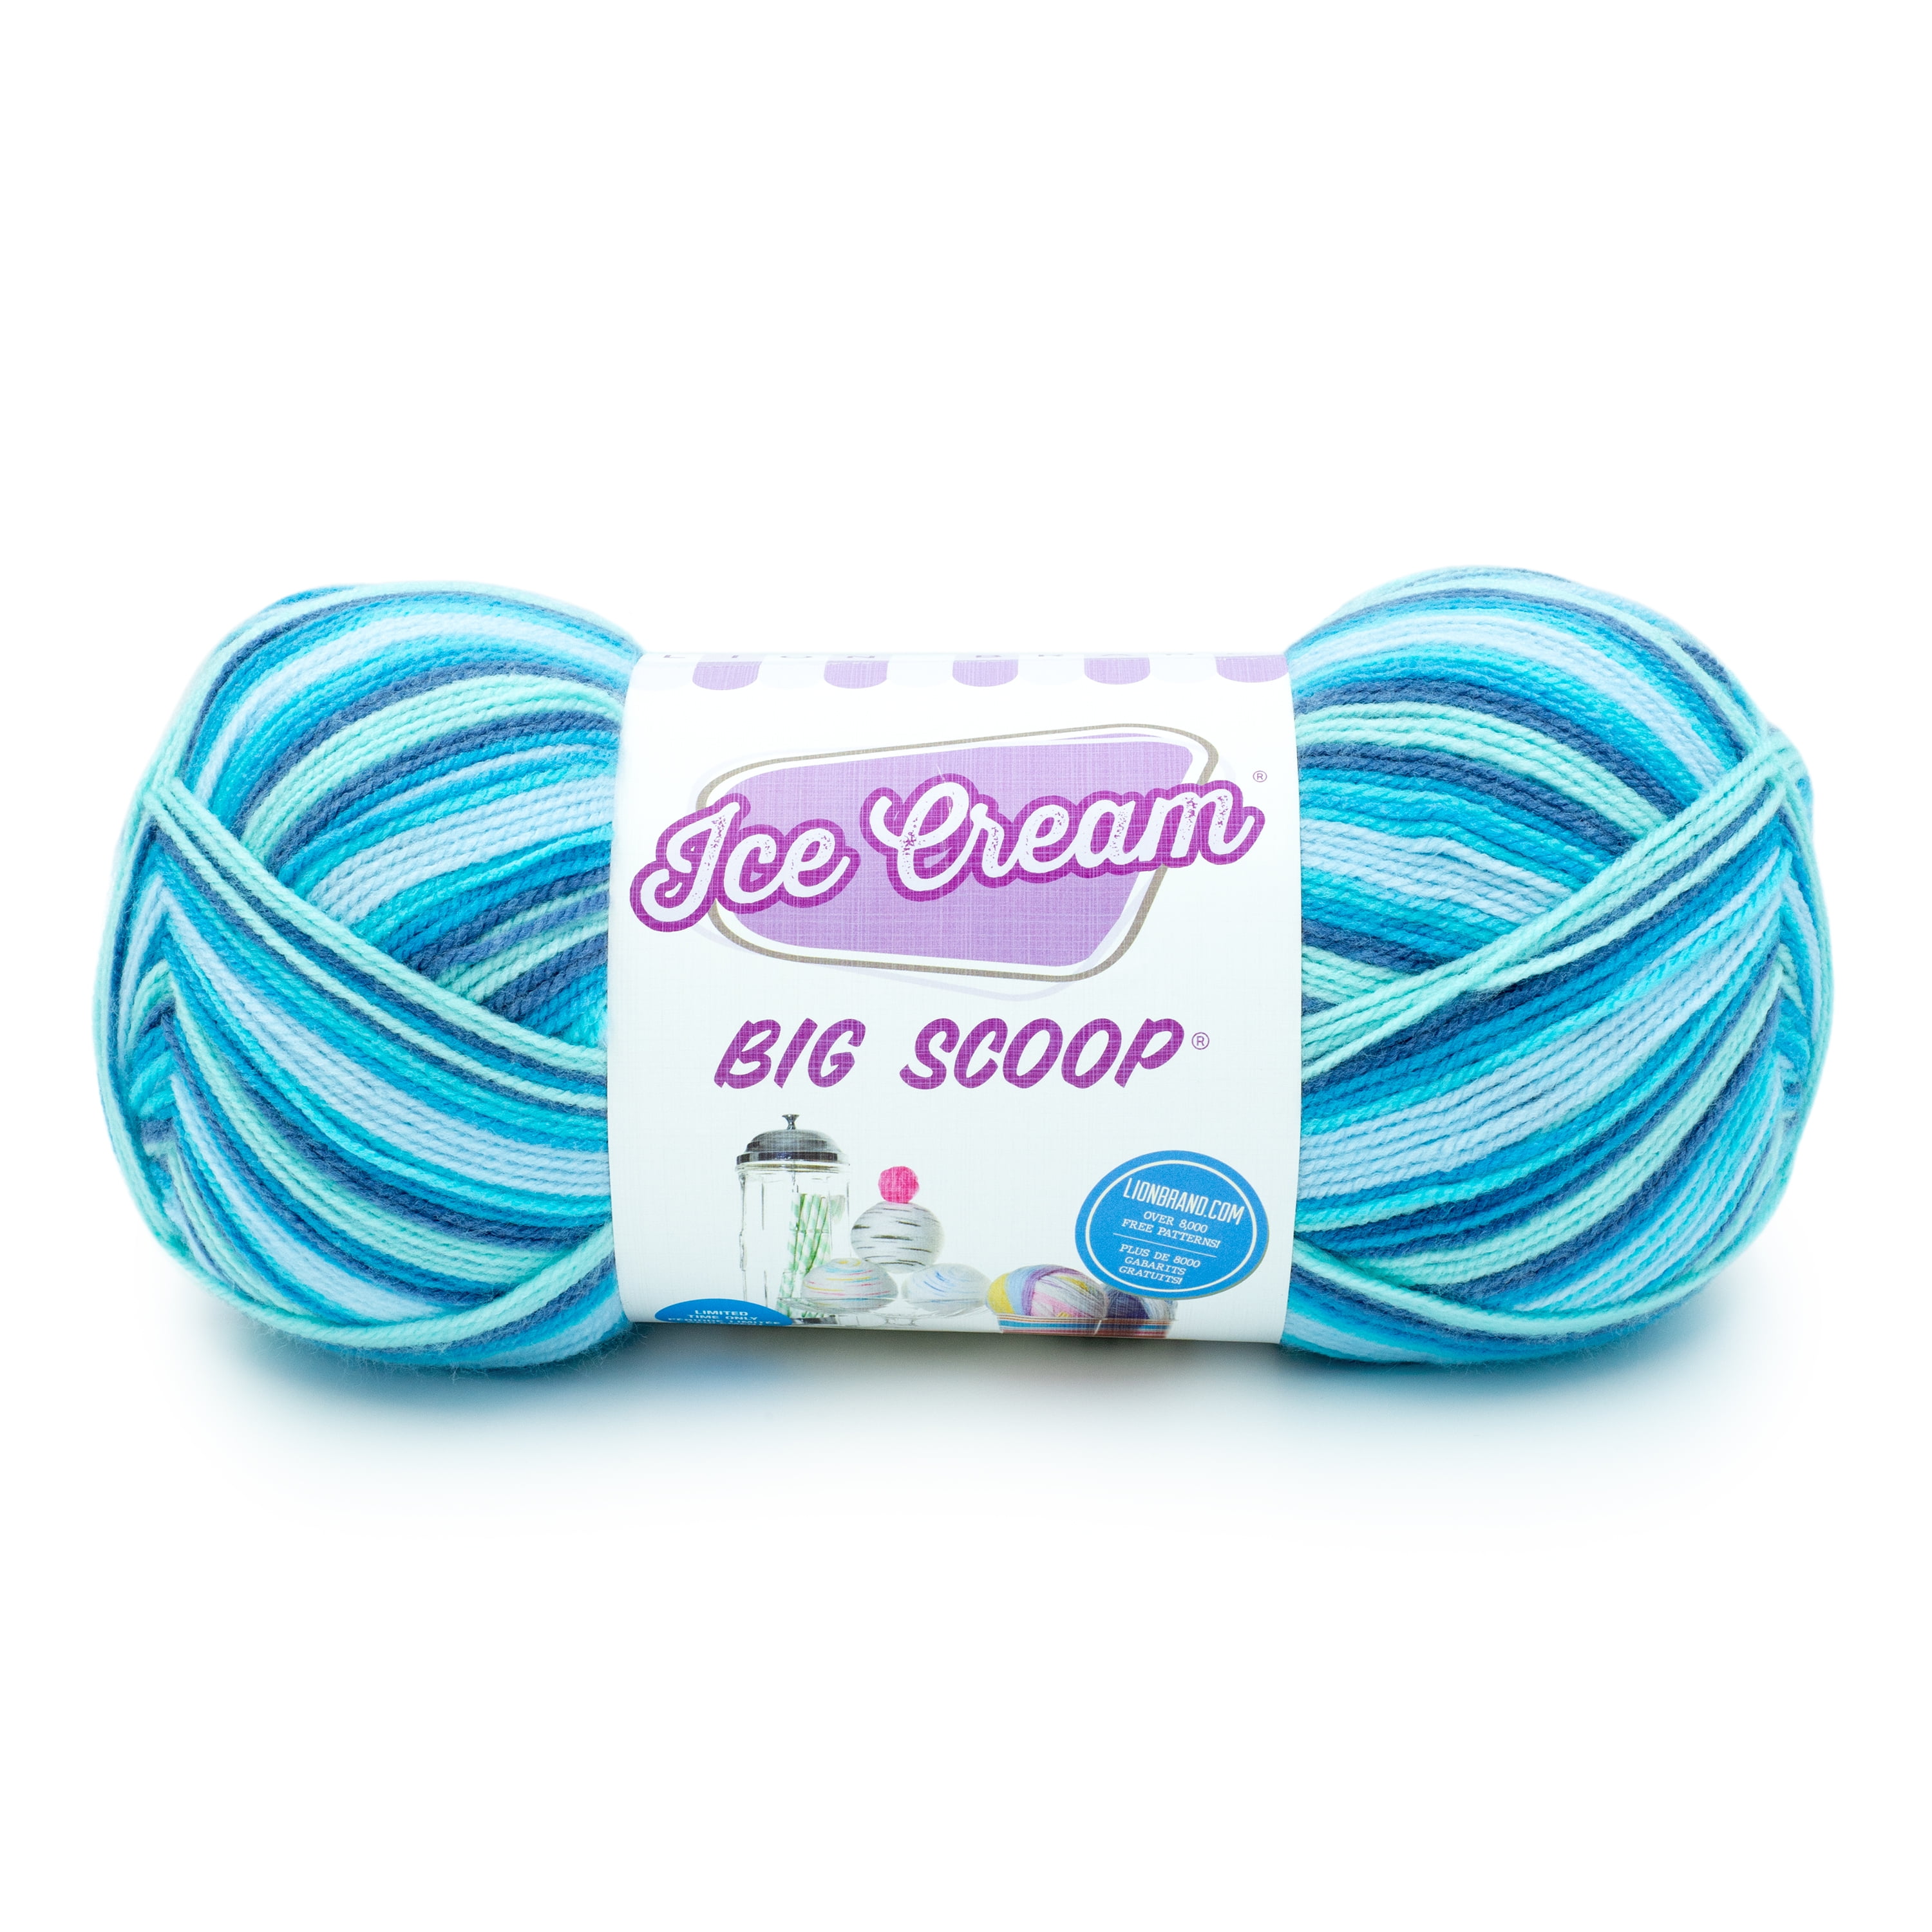 Lion Brand Yarn Ice Cream Big Scoop Blue Raspberry Light Acrylic  Multi-color Yarn 1 Pack